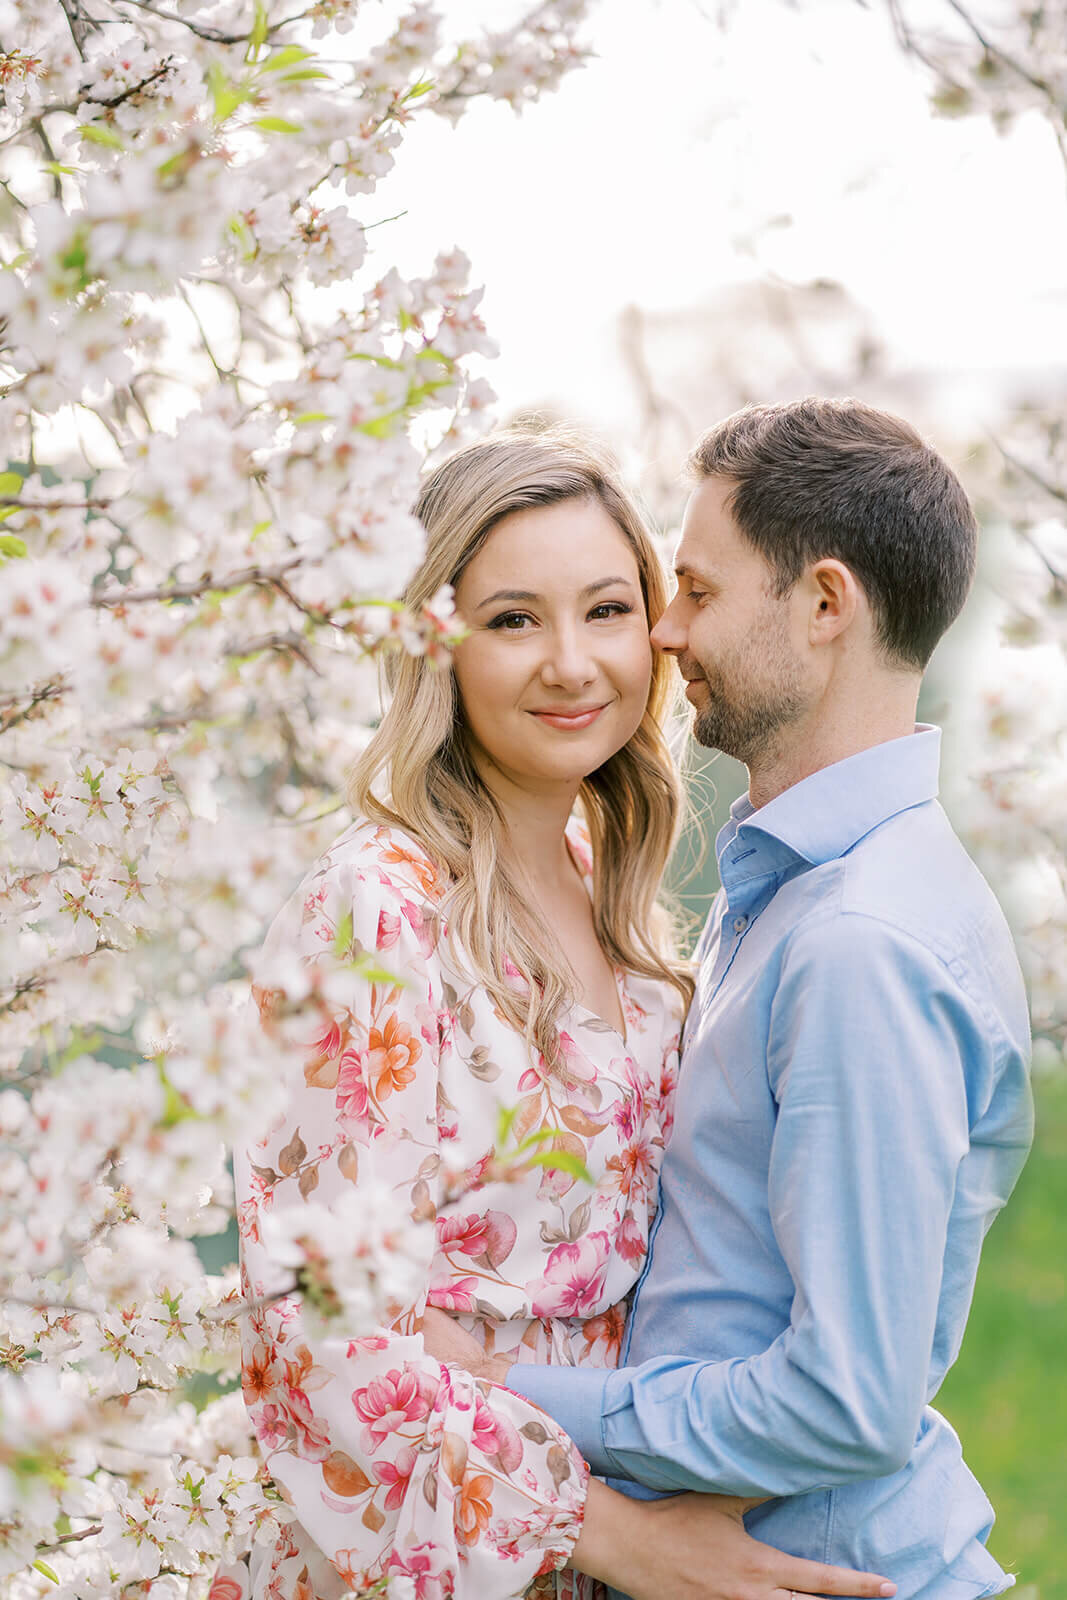 Cherish the sunset magic under Adelaide's almond blossoms with Brisbane couples photographer Hikari Lifestyle Photography.